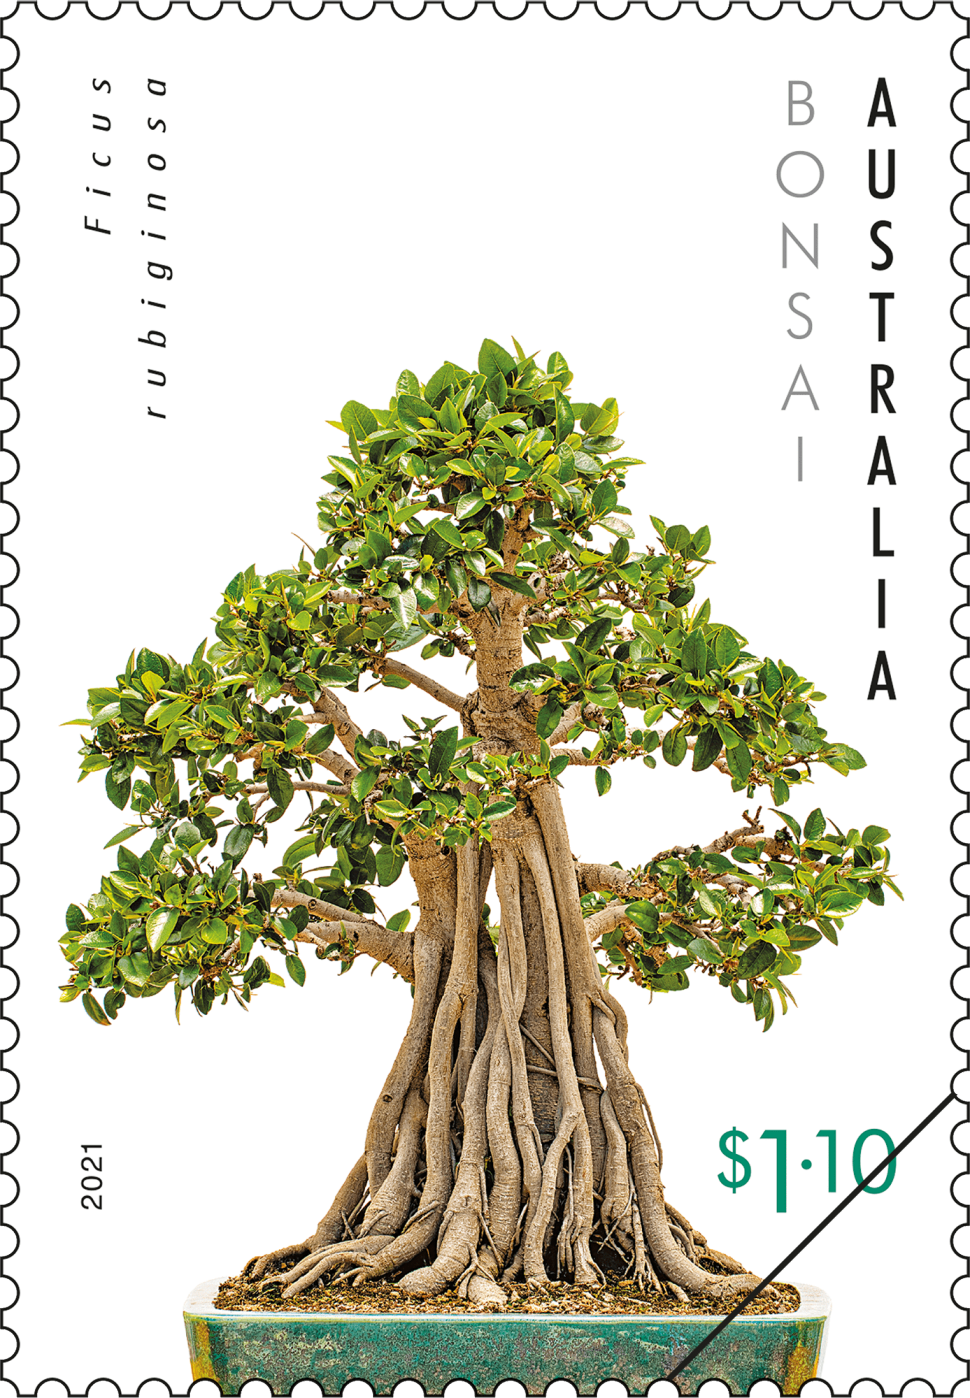 $1.10 Ficus rubiginosa